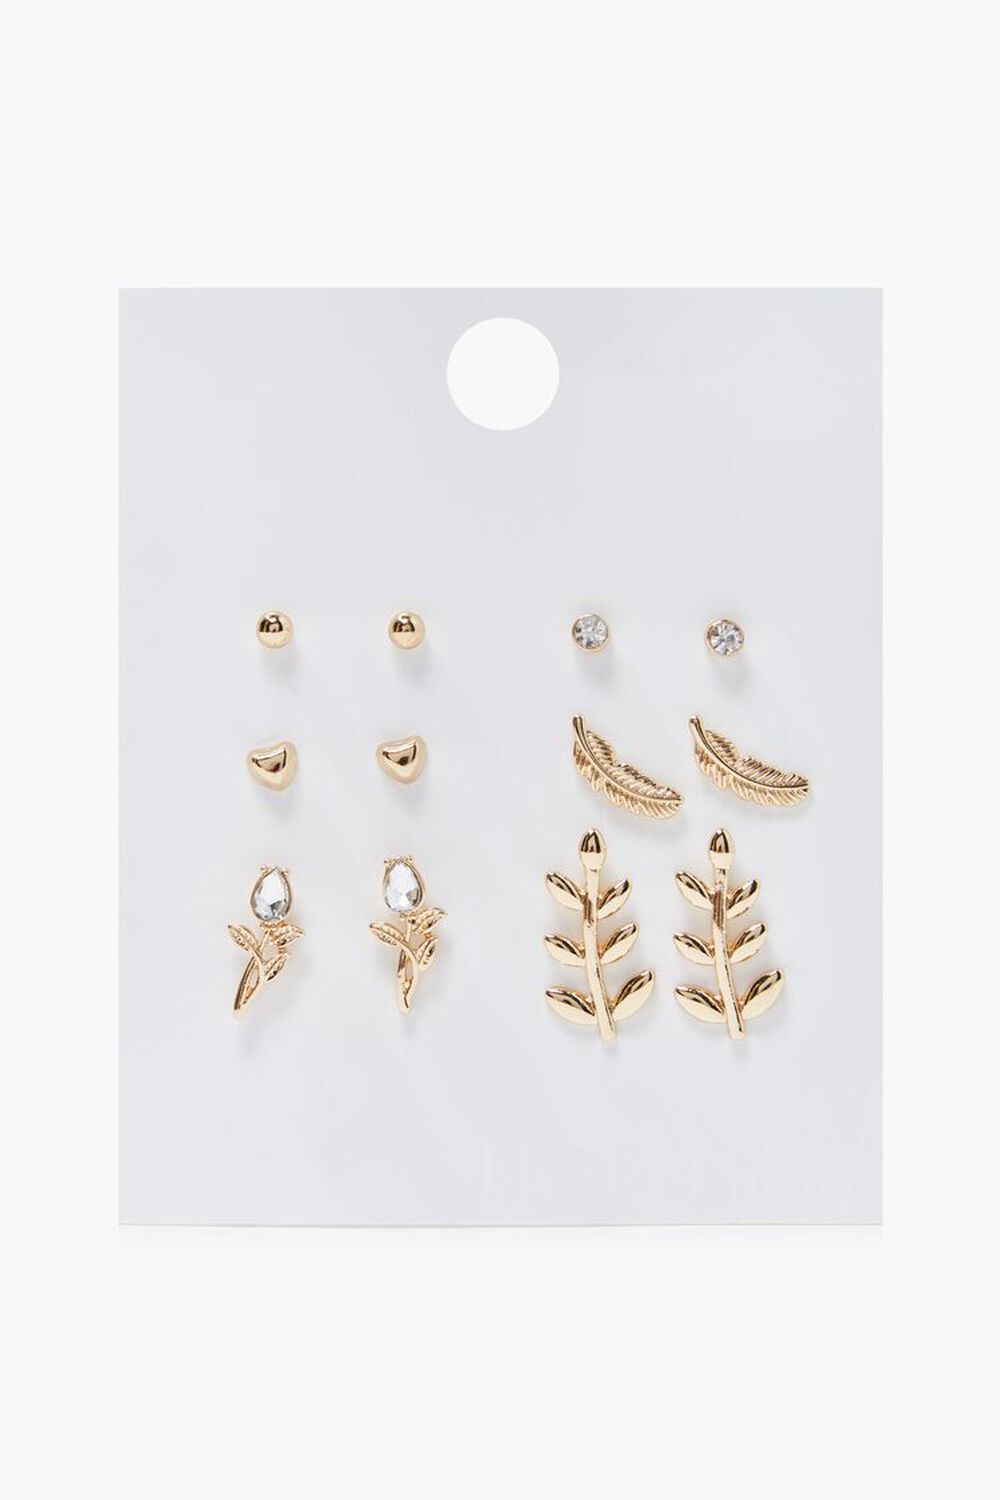 GOLD Feather & Leaf Charm Stud Earring Set, image 1